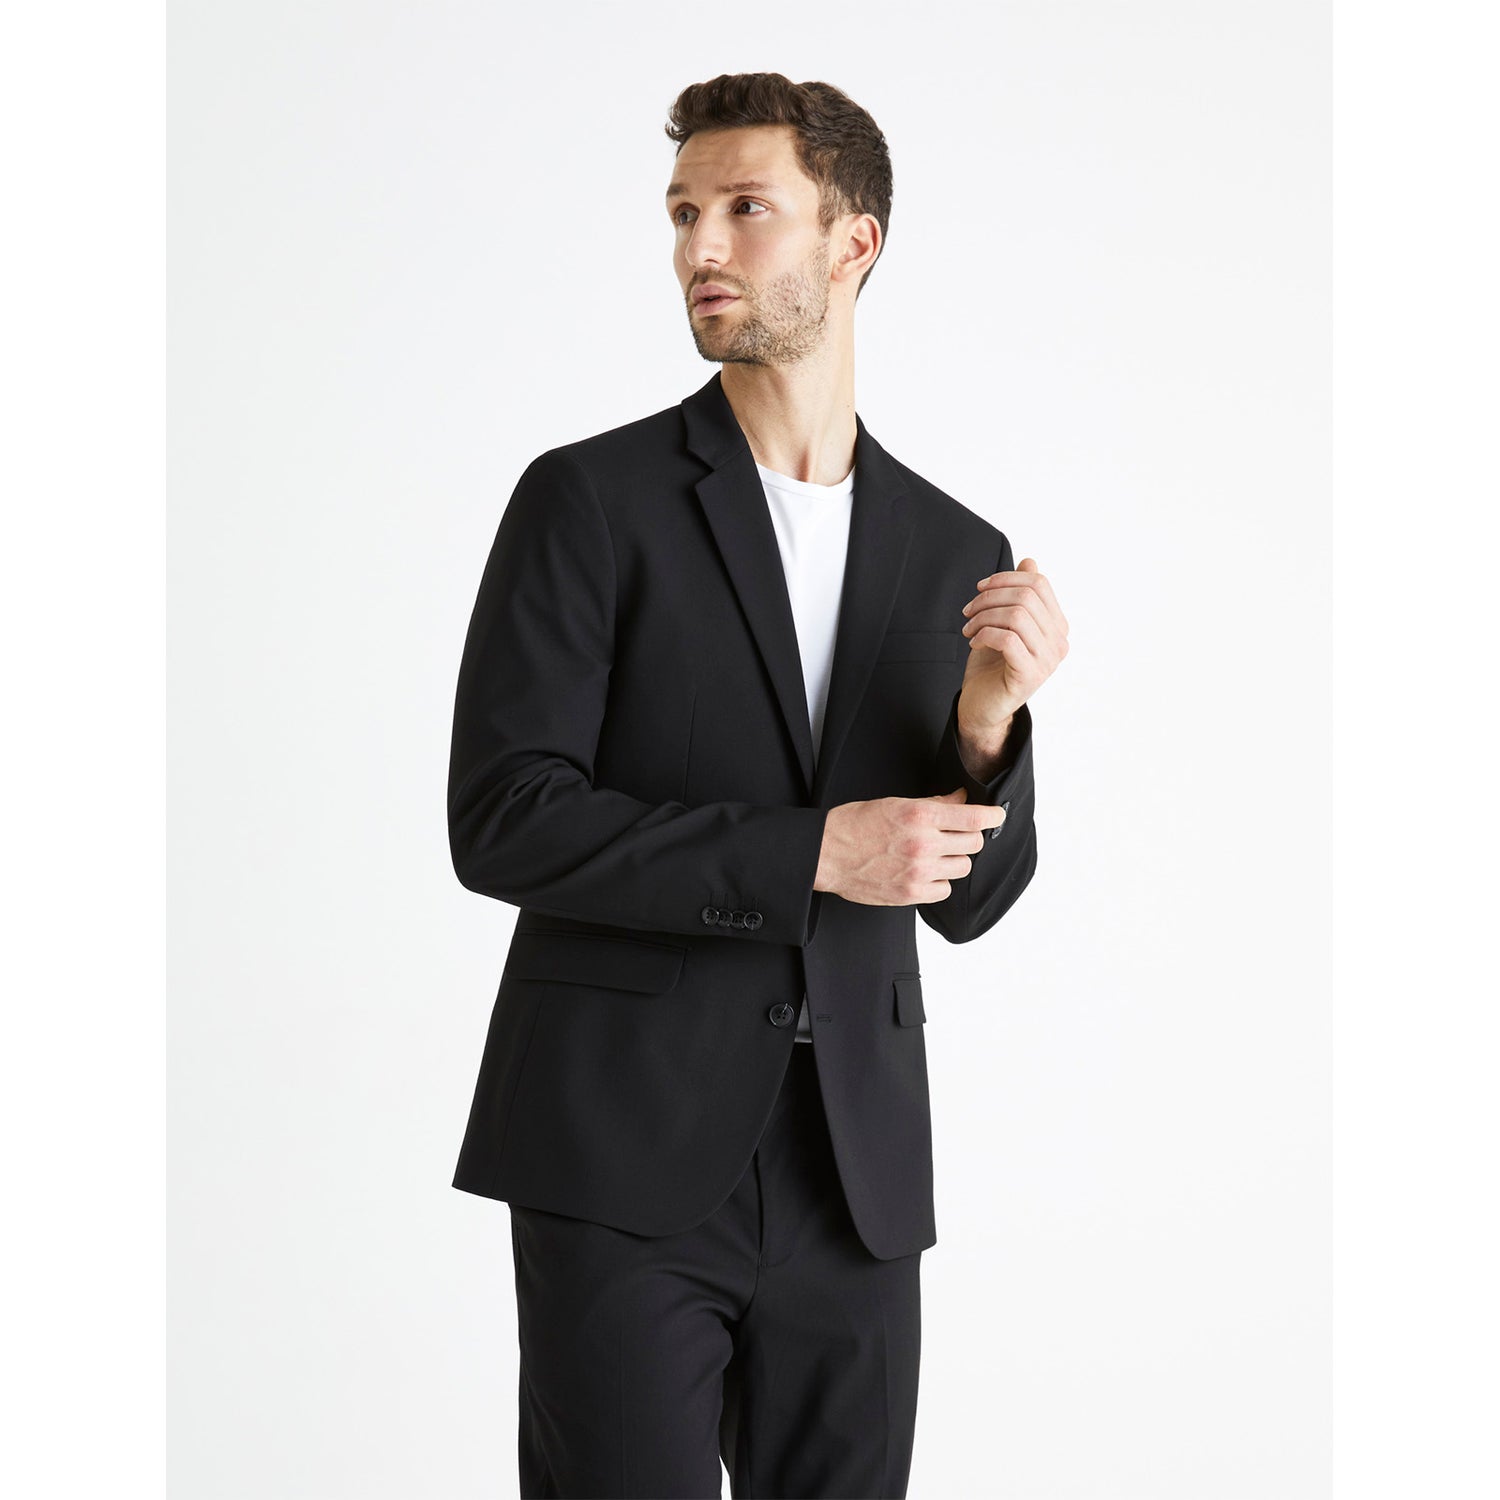 Black Solid Polyester Blend Half Button Placket Suit Jacket (BUAMAURY)